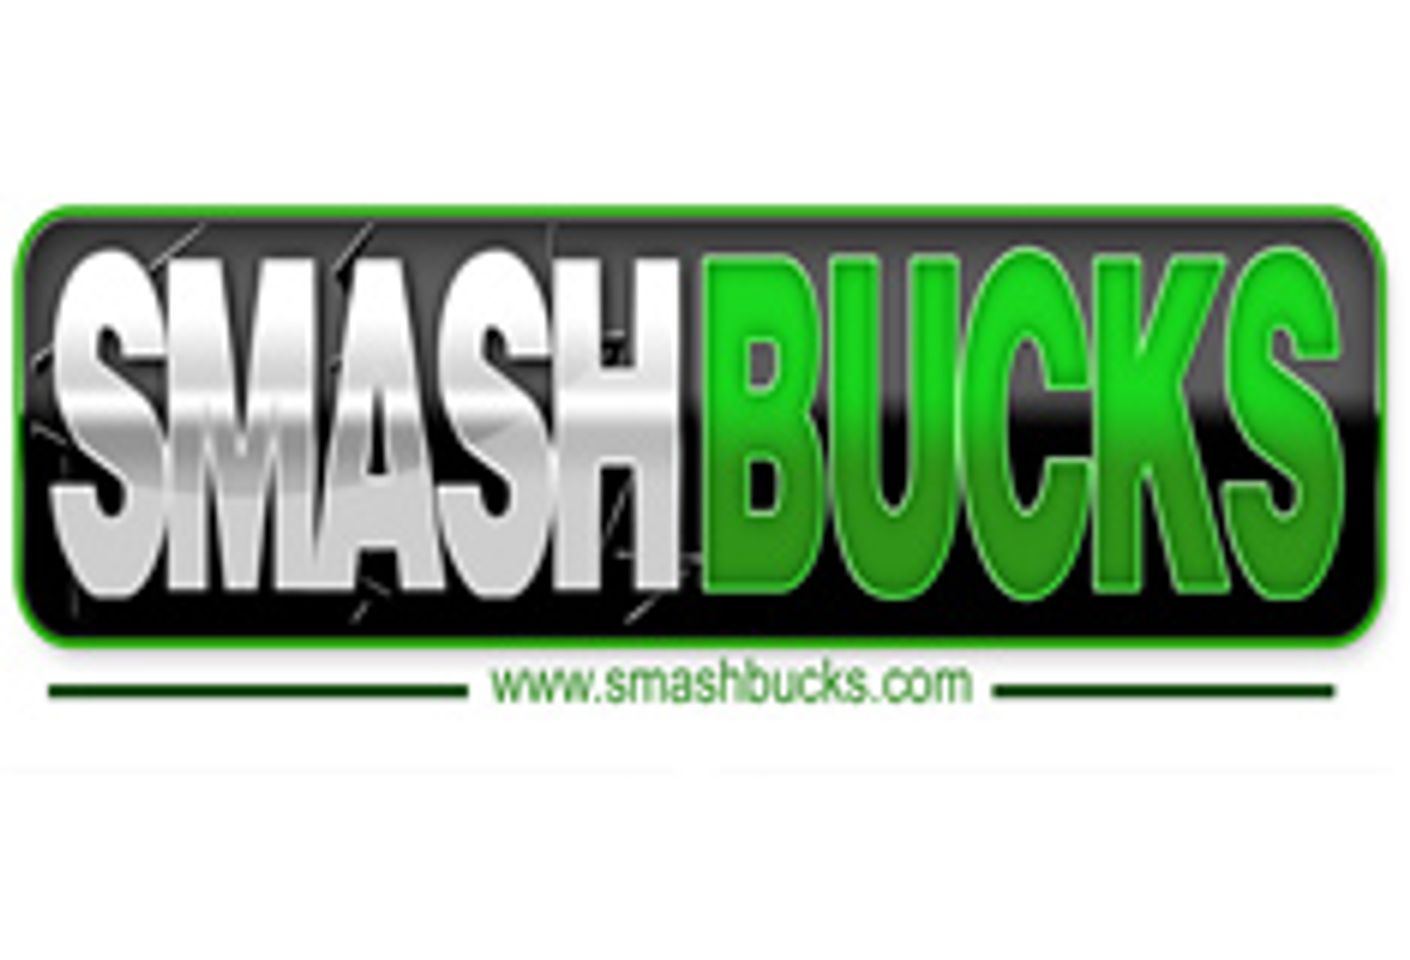 Smashbucks Hosting Late-Night Poker at Phoenix Forum